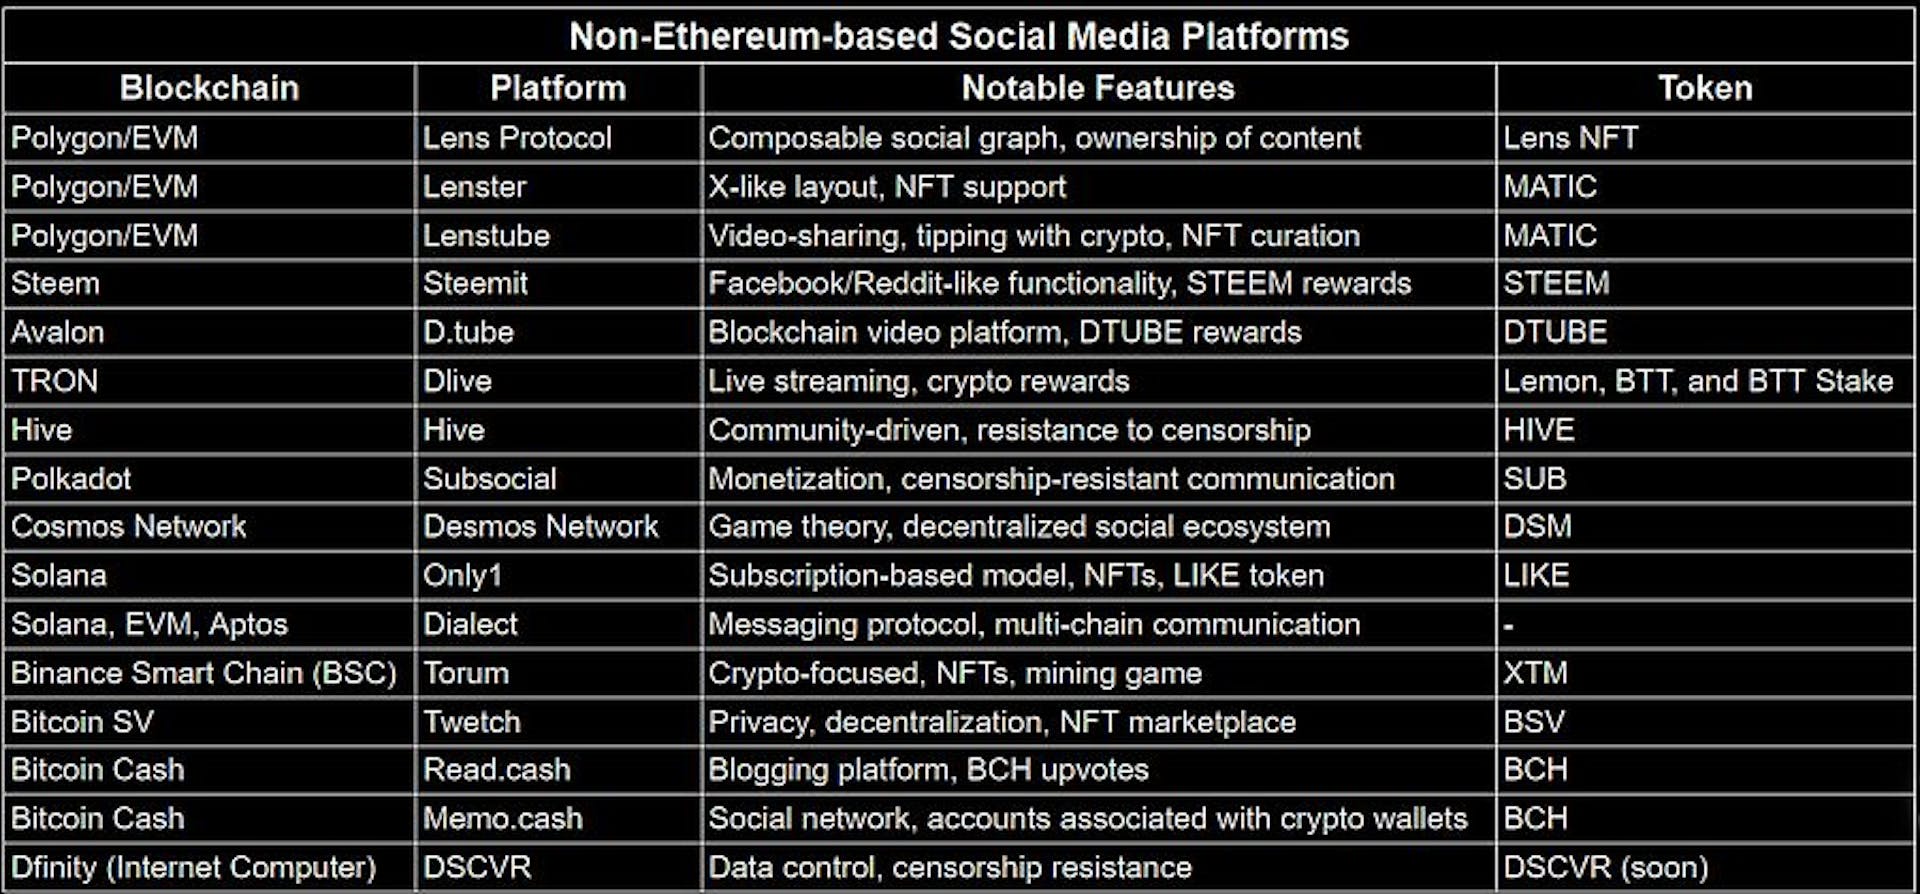 Non-Ethereum-based Social Media Platforms